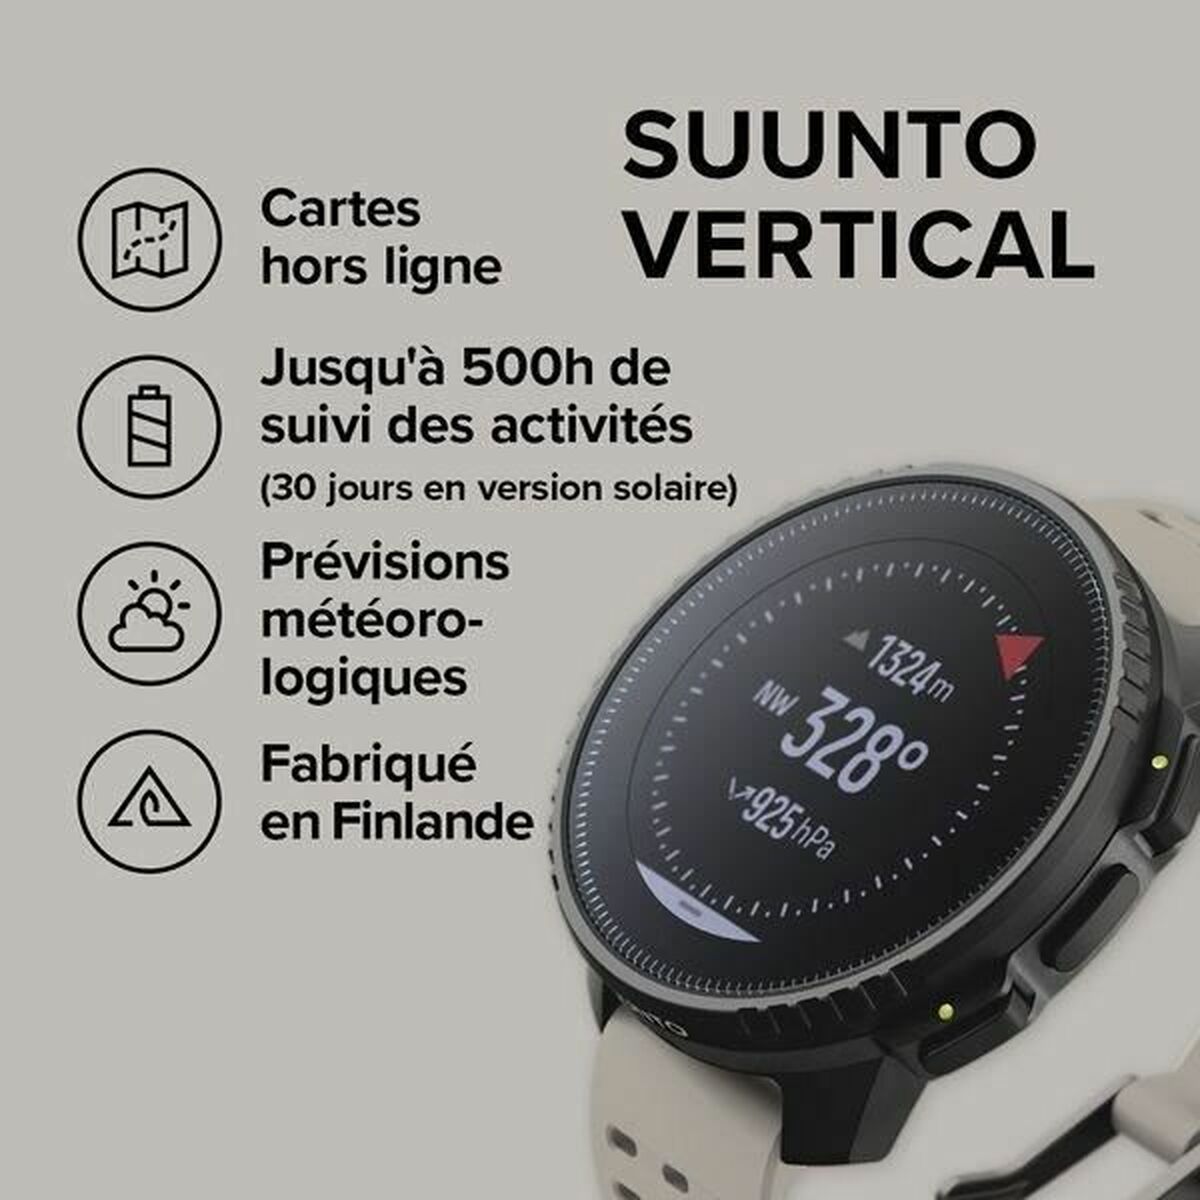 Smartwatch Suunto - CA International 